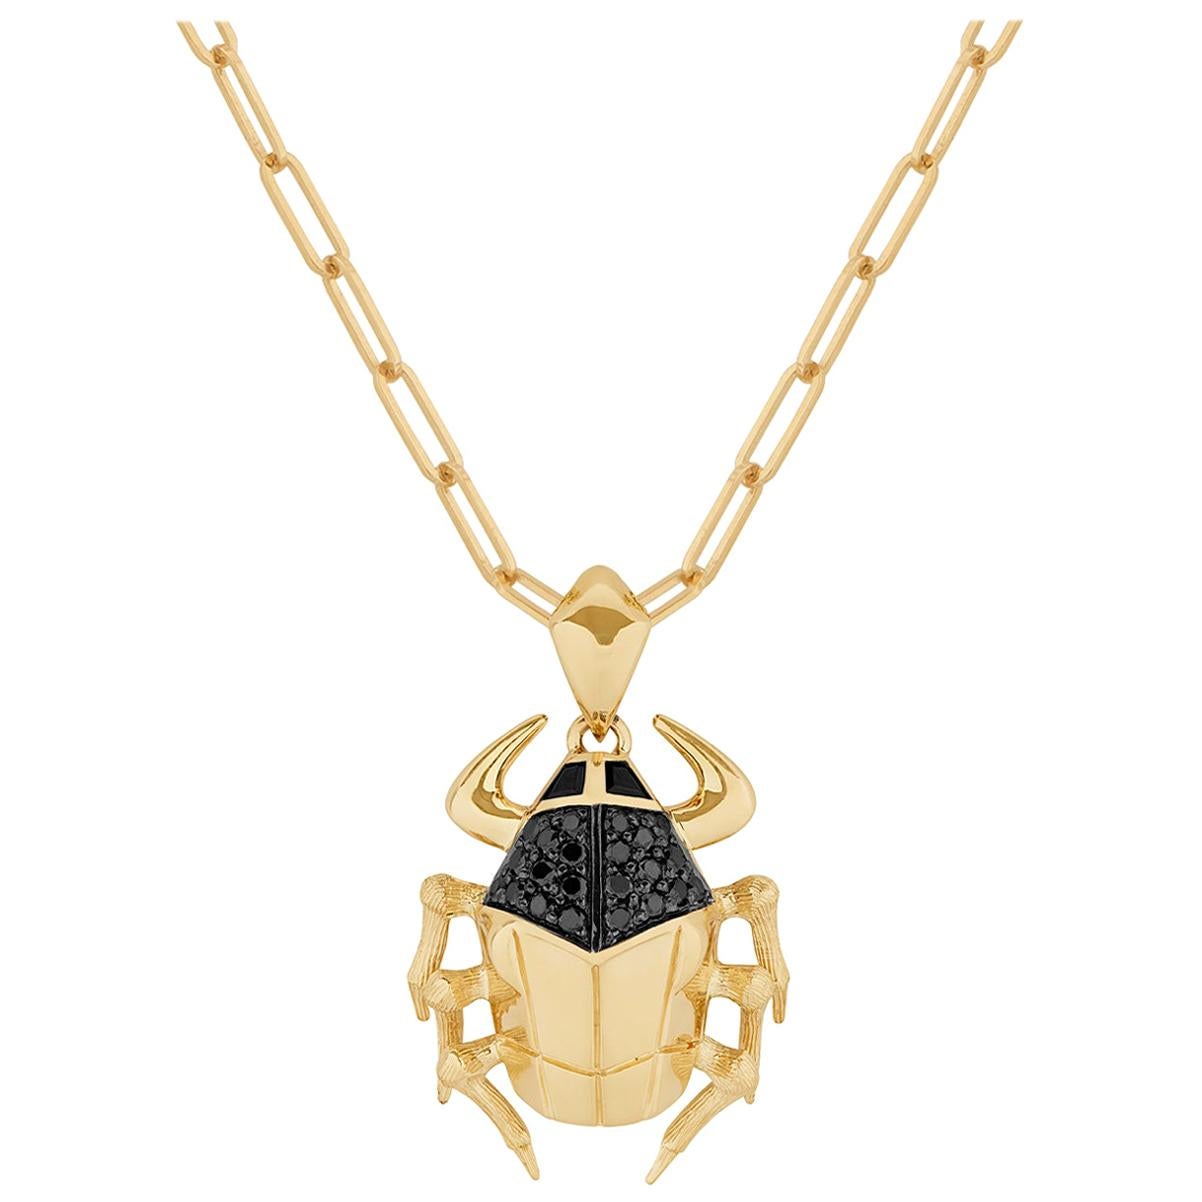 Stephen Webster Jitterbug Toro Beetle 18 Carat Gold and Black Diamond Pendant